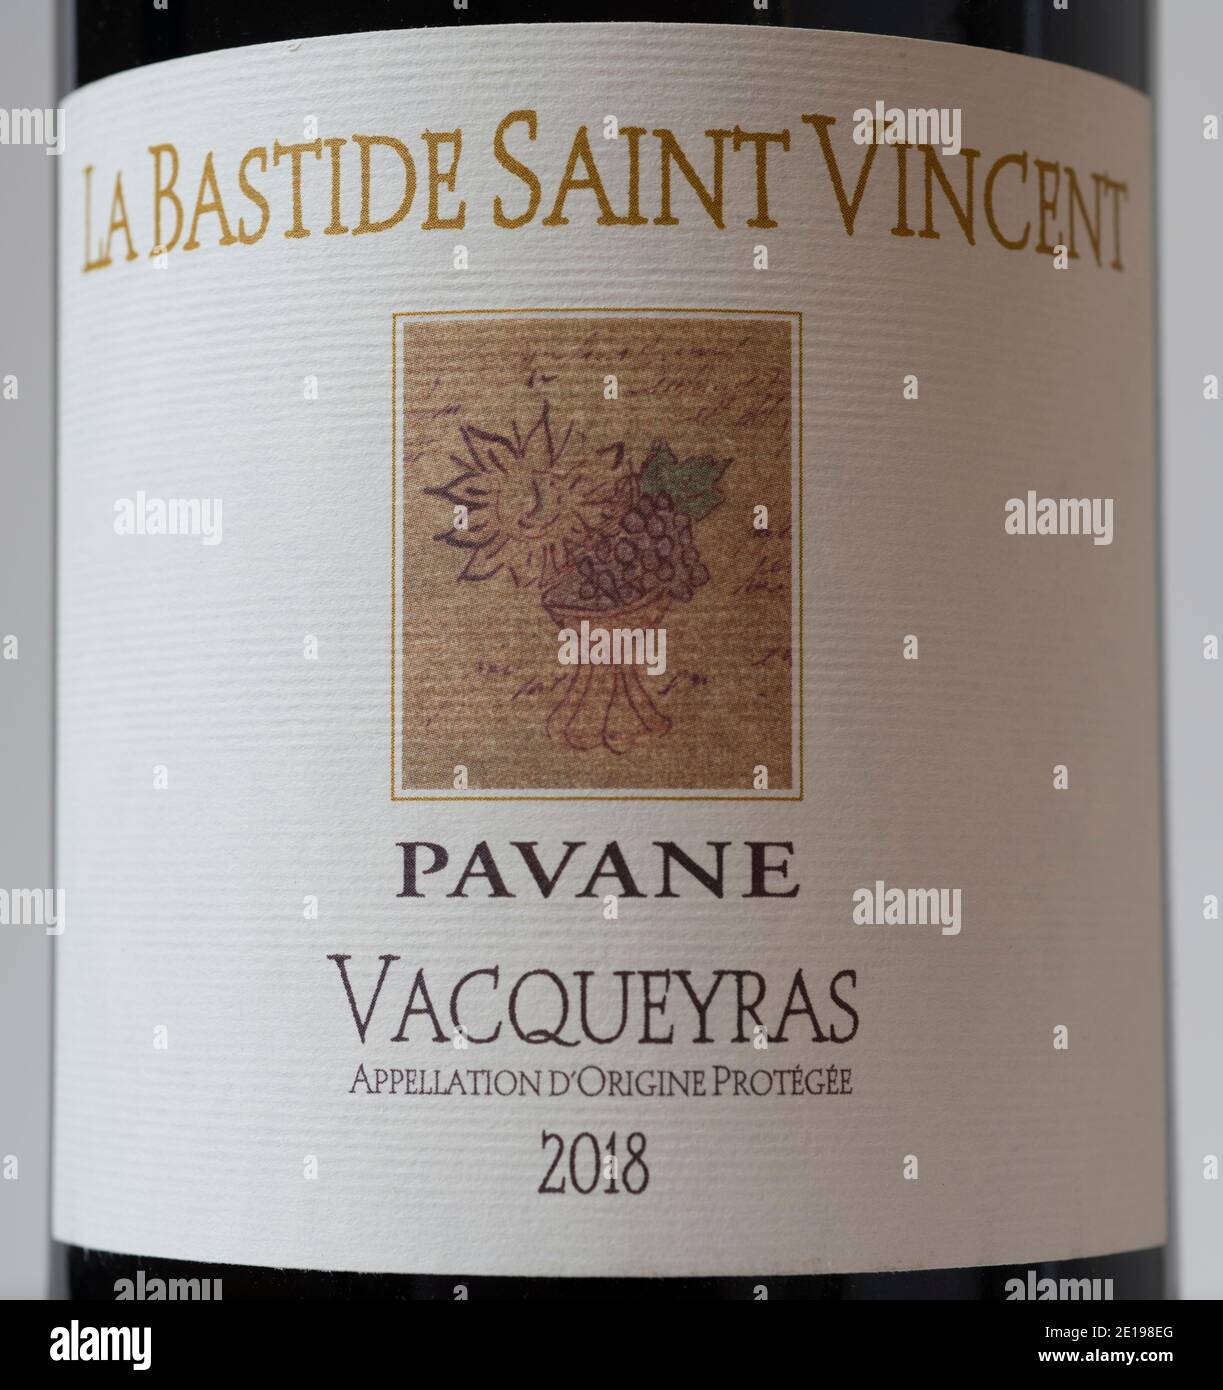 La Bastide Saint Vincent Vacqueyras Rhone Valley wine bottle label Stock Photo